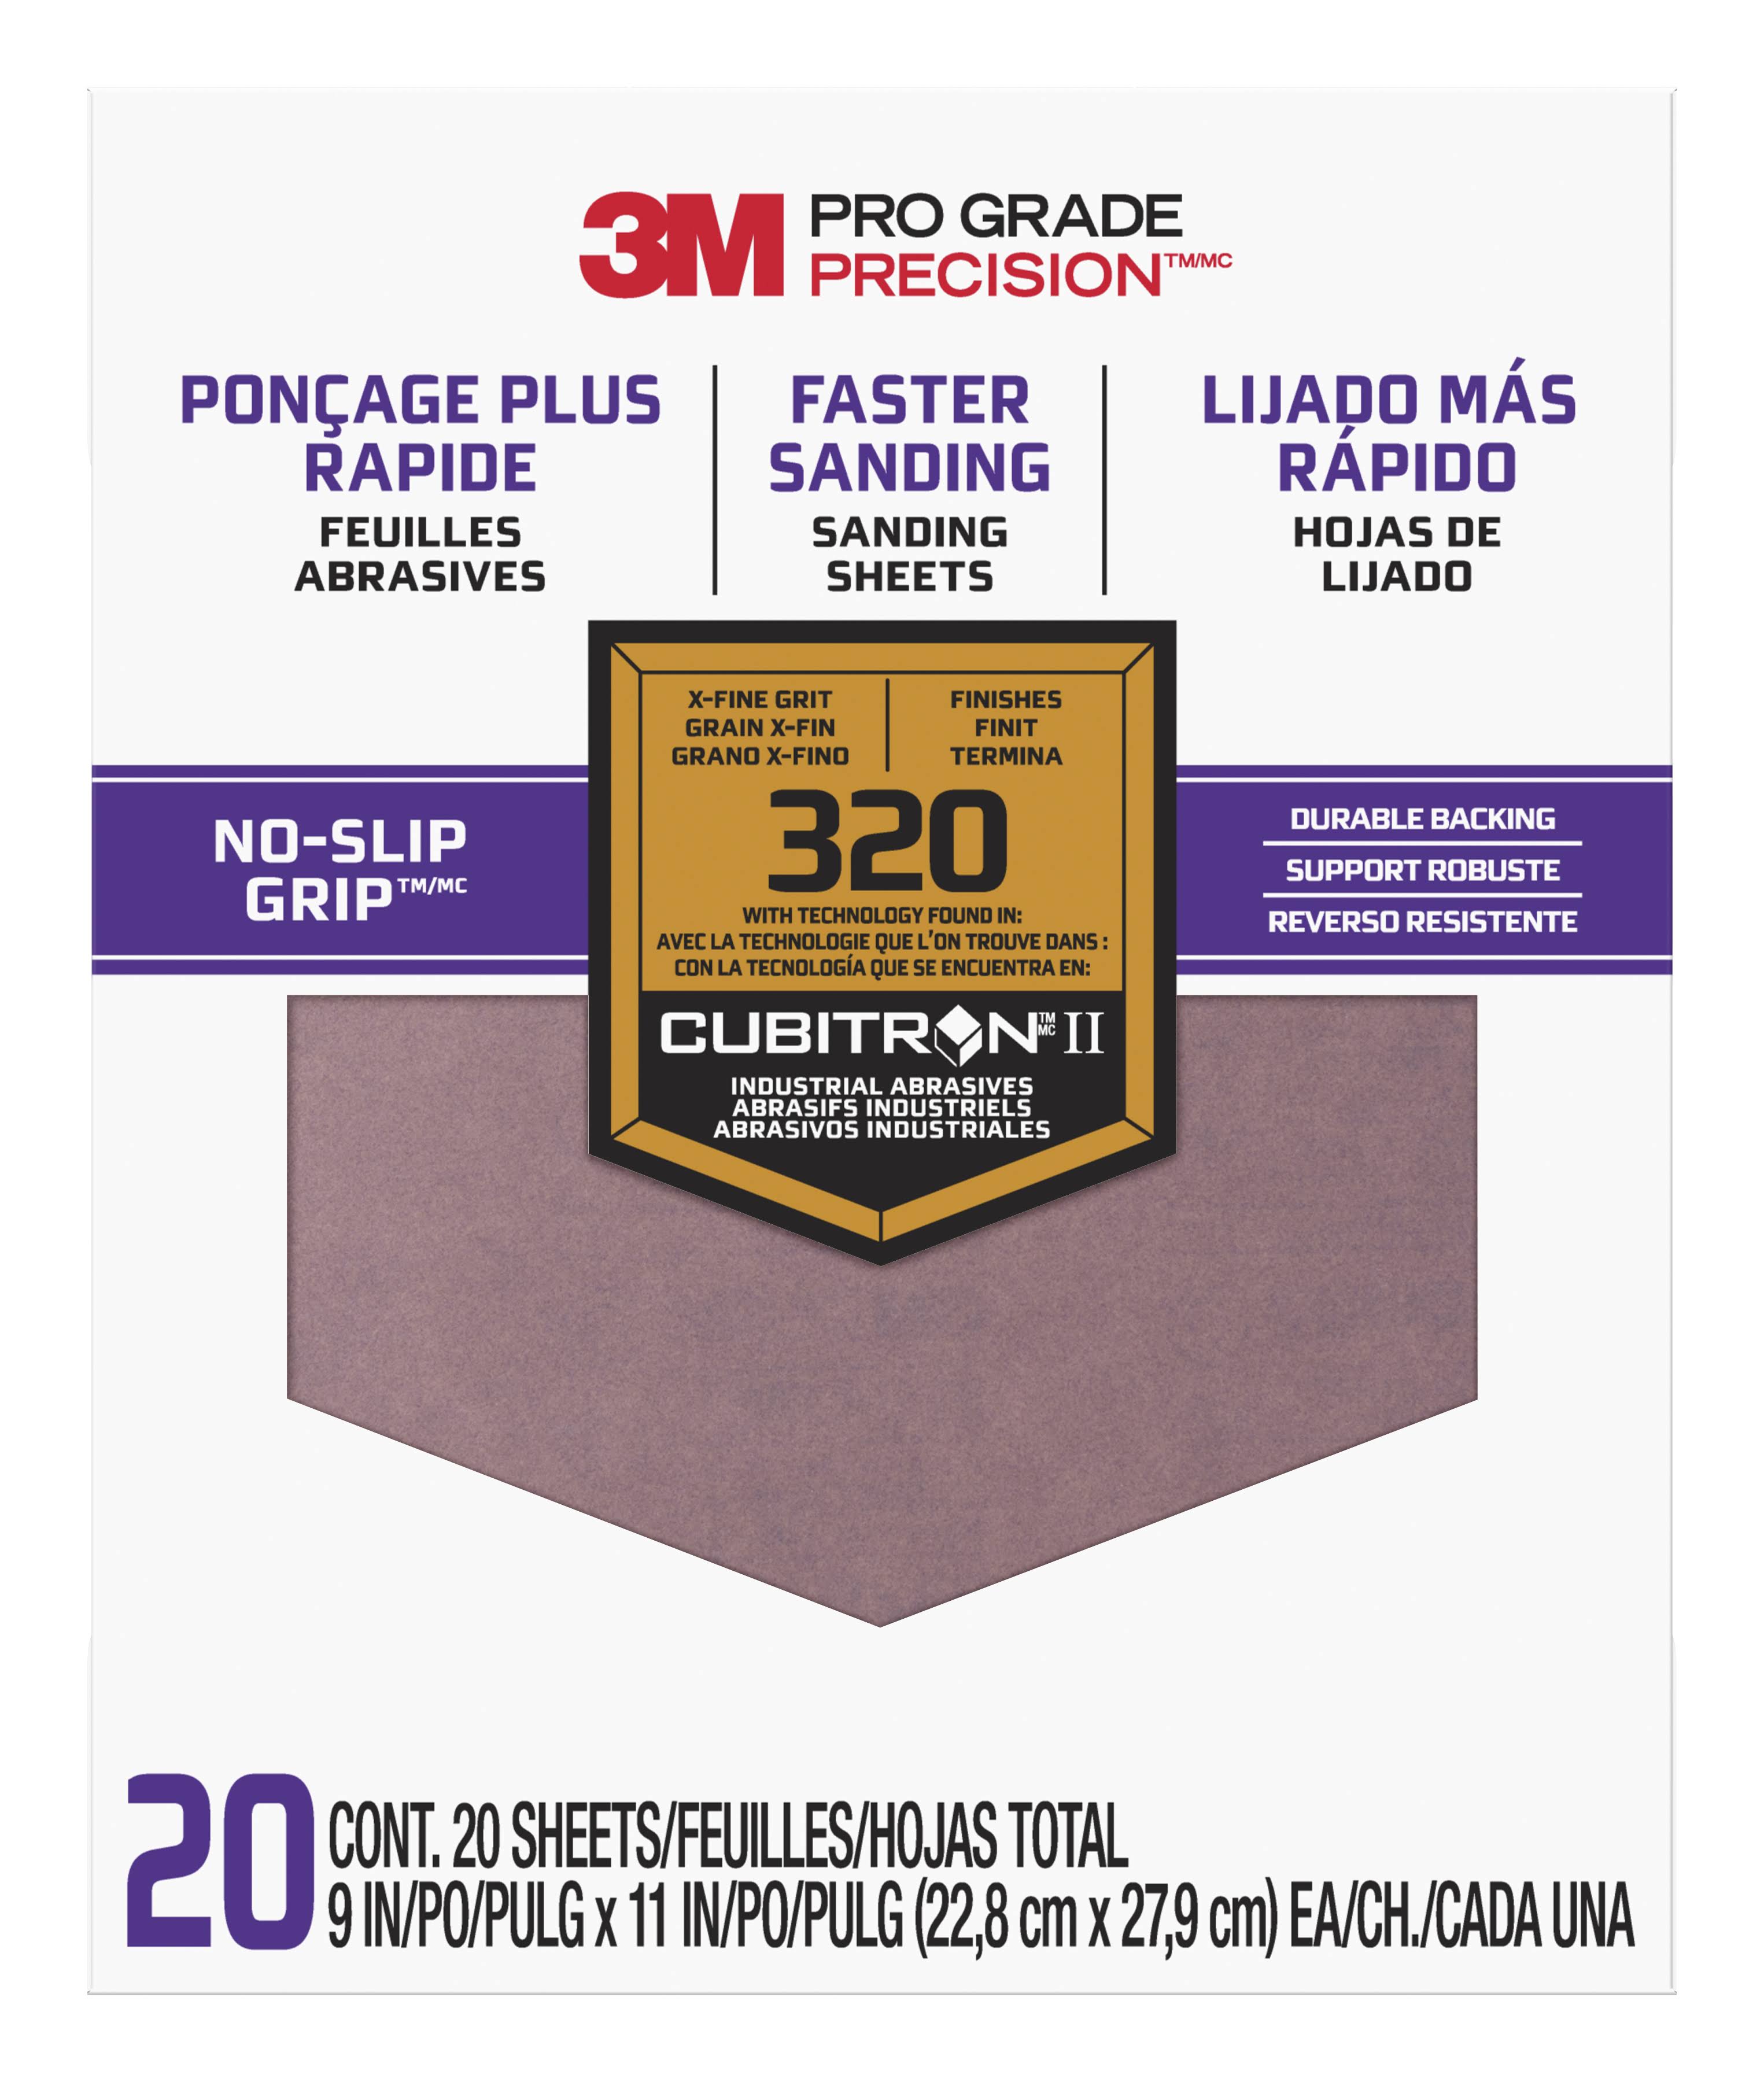 3M Pro Grade Advanced Sandpaper - 9" x 11", Grit 320